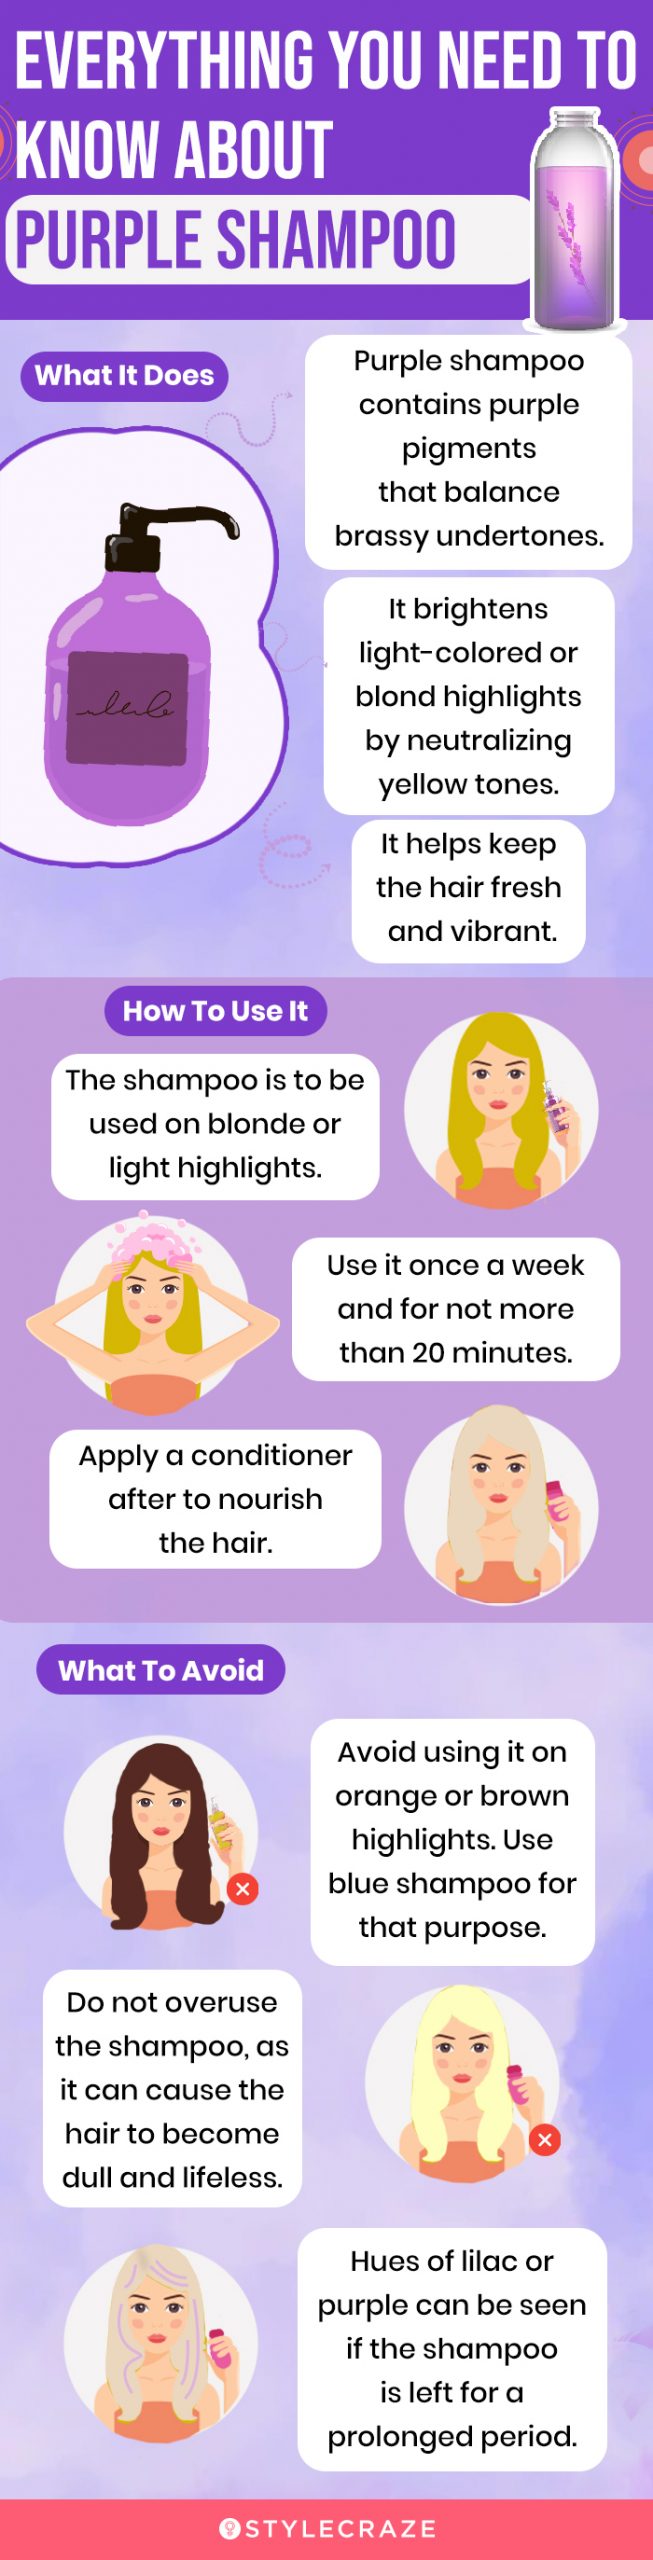 What If You Purple Shampoo Brown Hair?